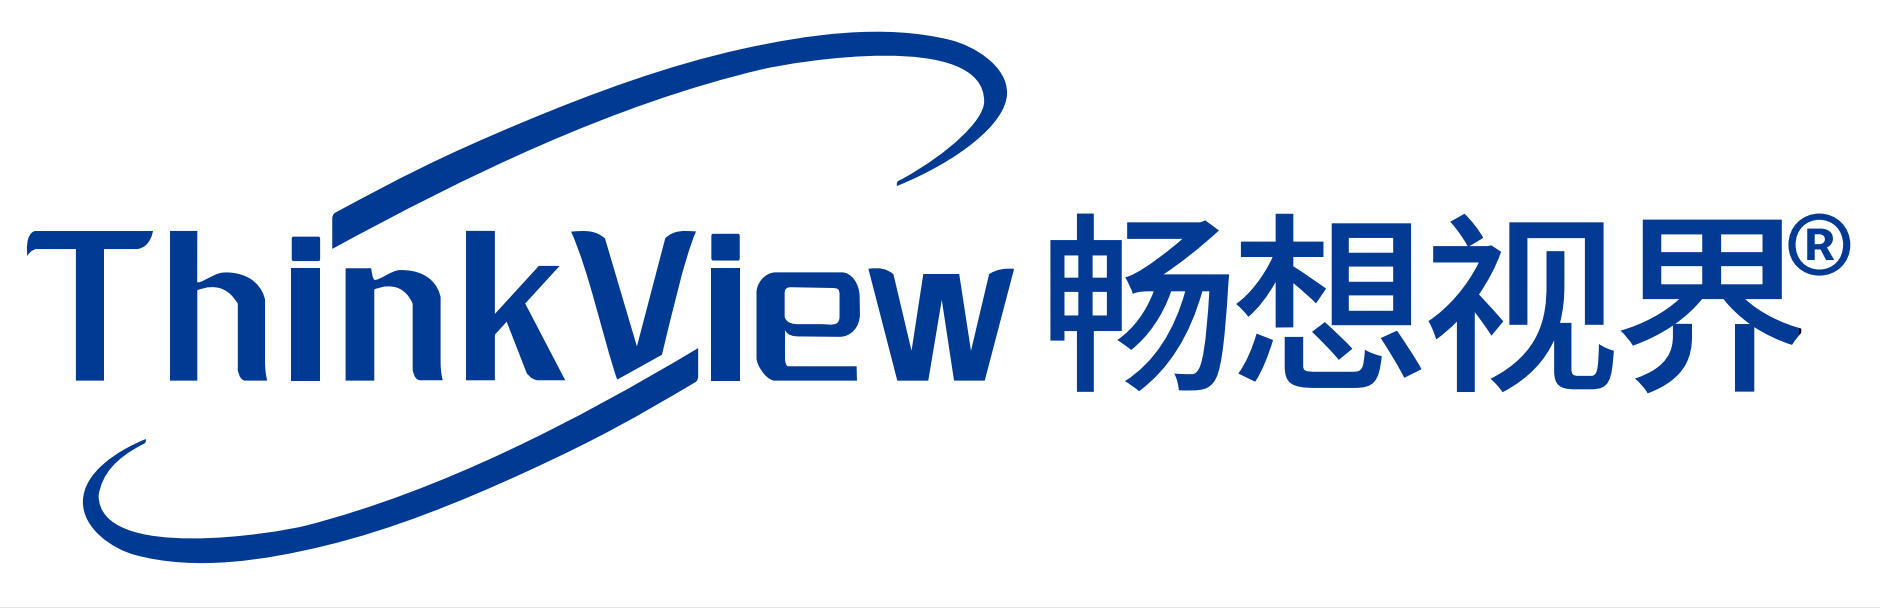 Teknolojia ya Shenzhen Thinkview Co, Ltd.